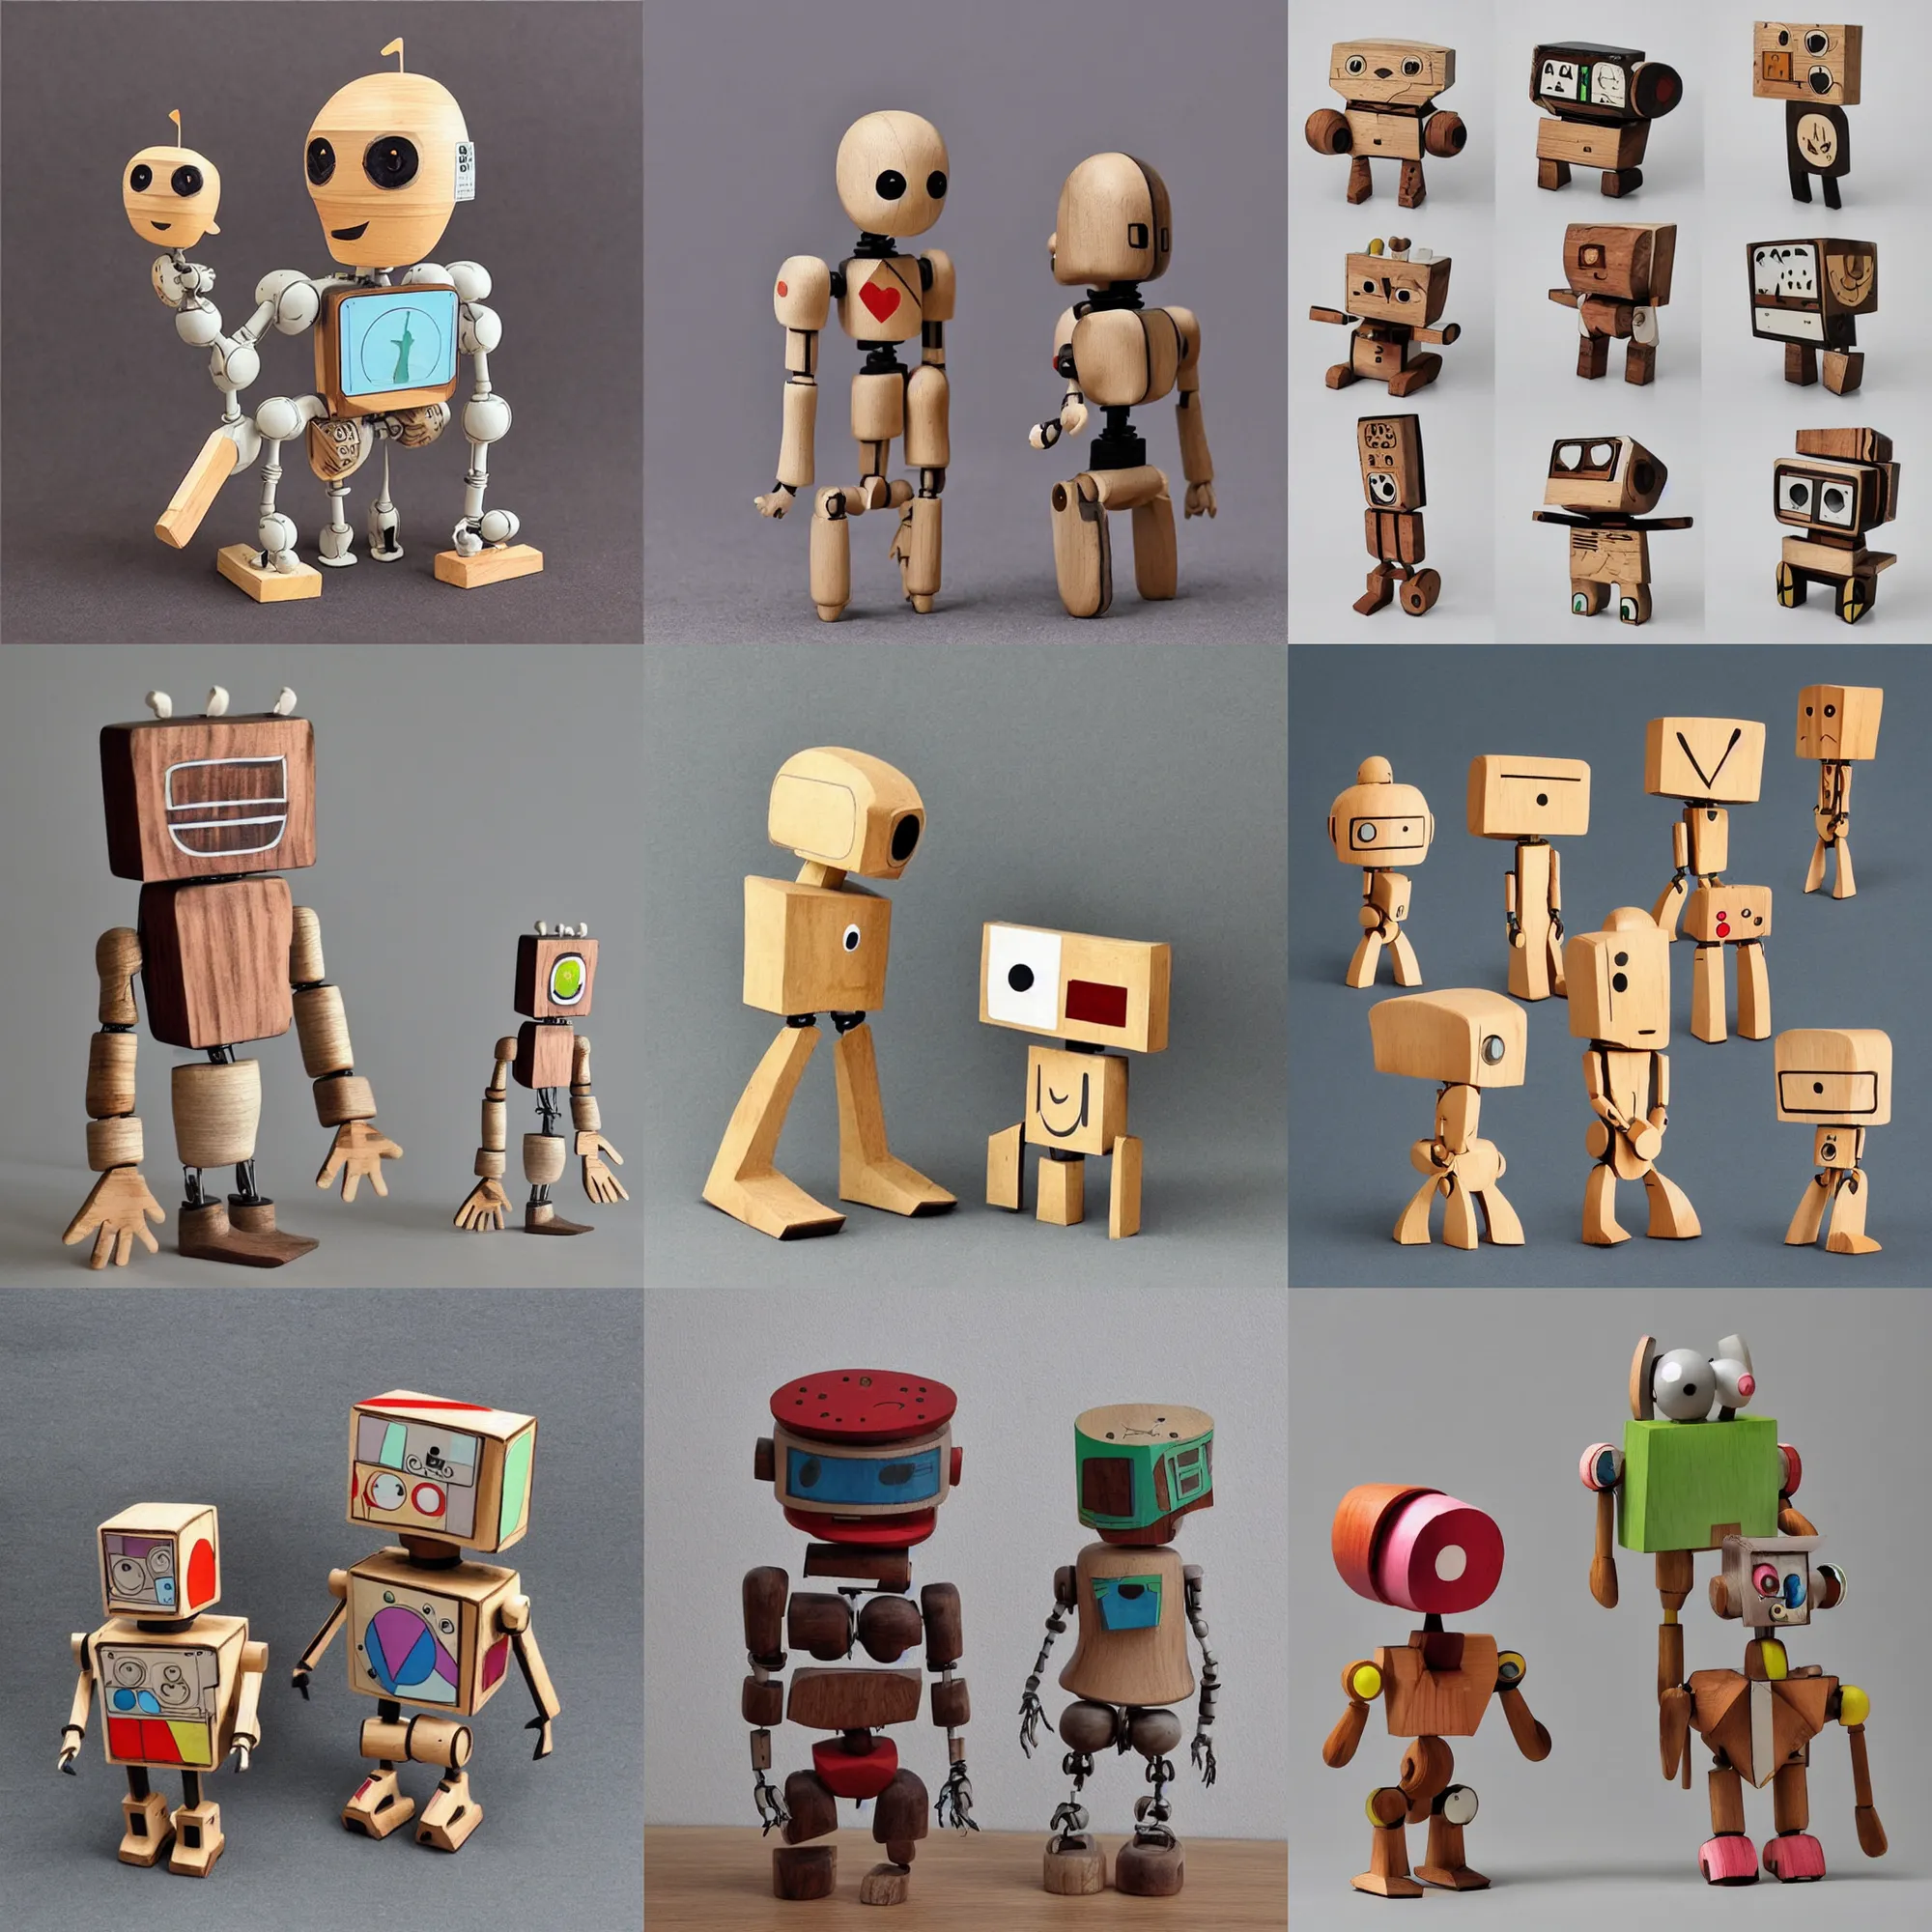 Prompt: art cute funny figurine wooden, robot punk futuriste geometrie